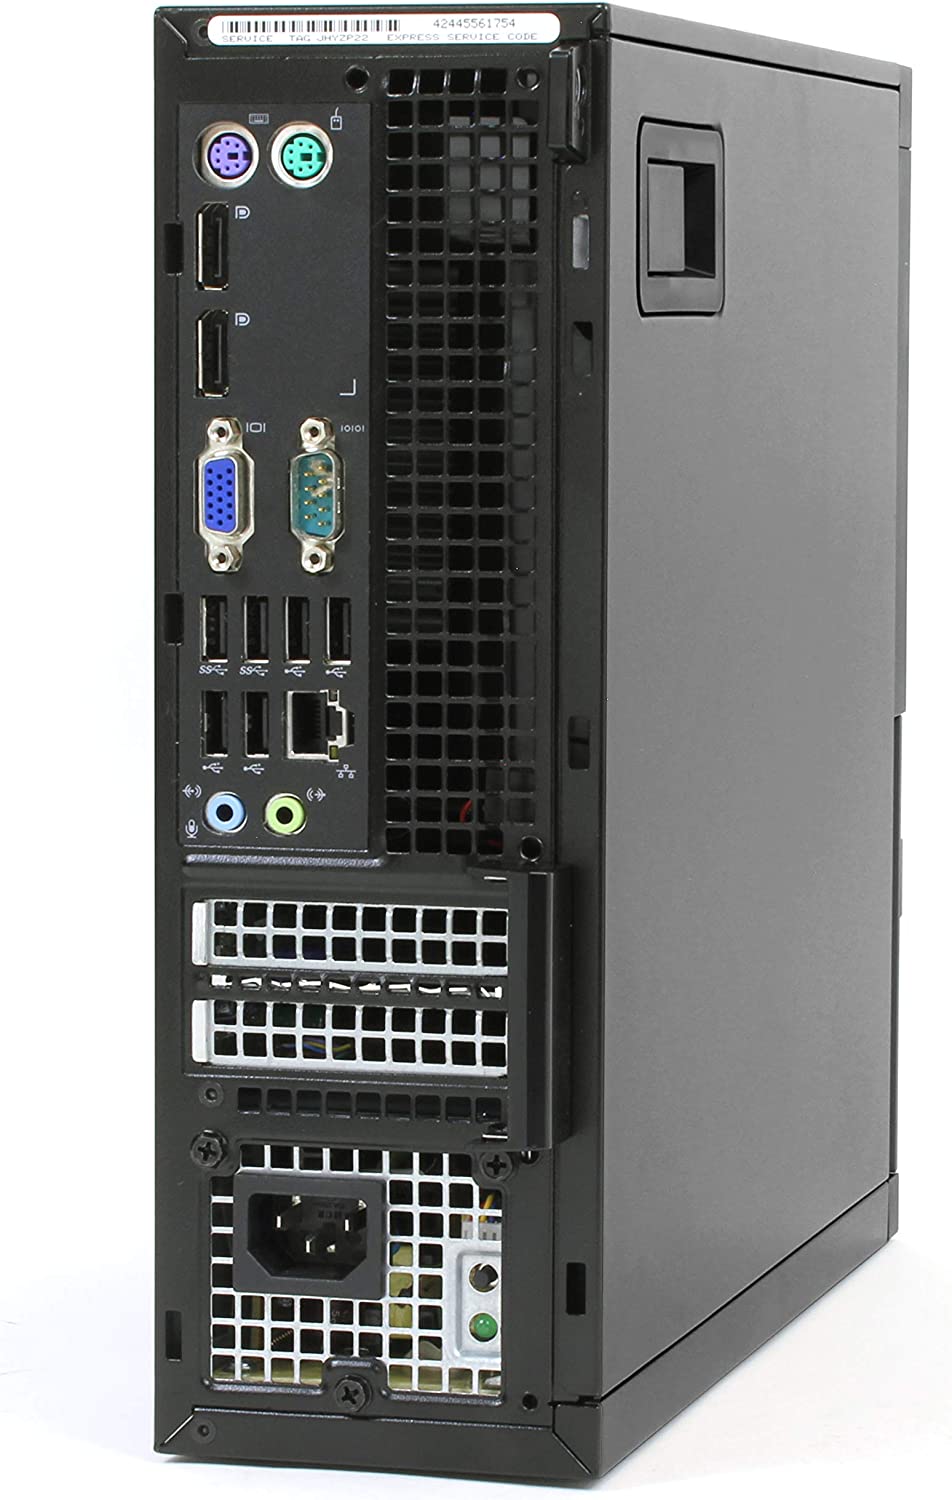 PC Dell Optiplex 9020 SFF (i7-4790, 8GB RAM, 500 GB) Reacondicionado Grado A